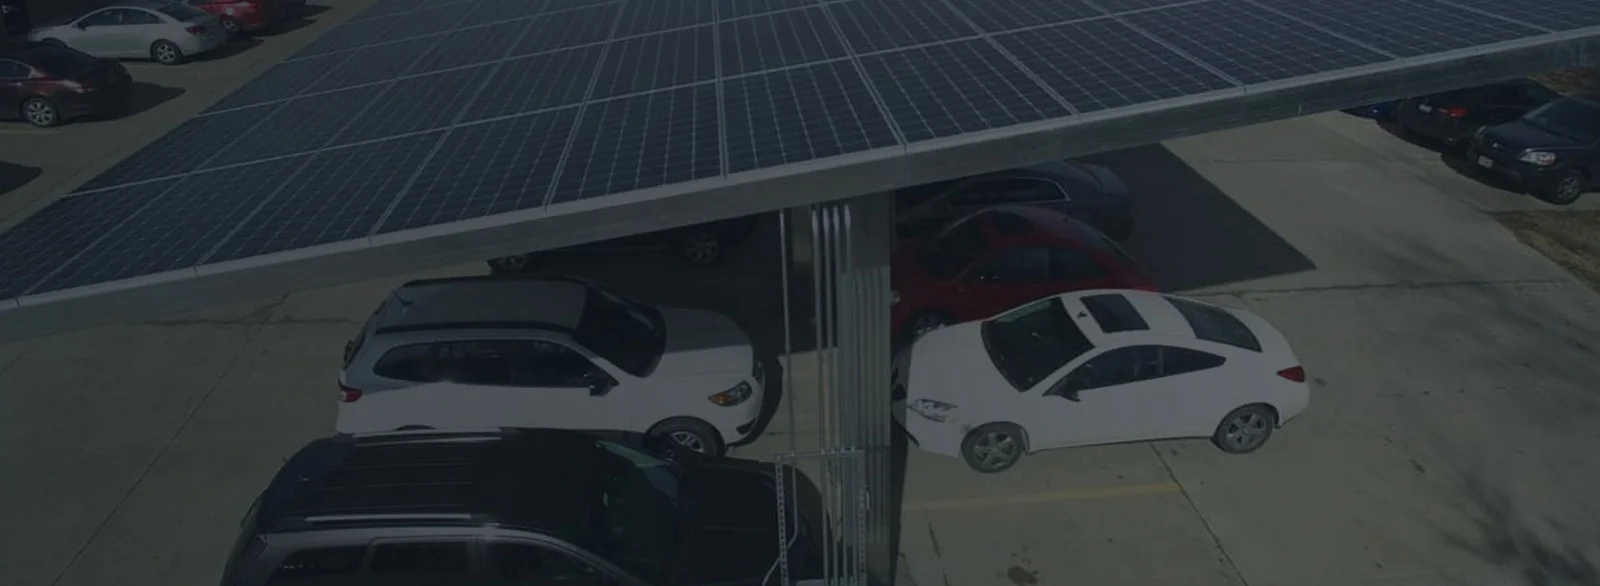 Solar Carports | Ganges Internationale | car parks | versatile carport solution